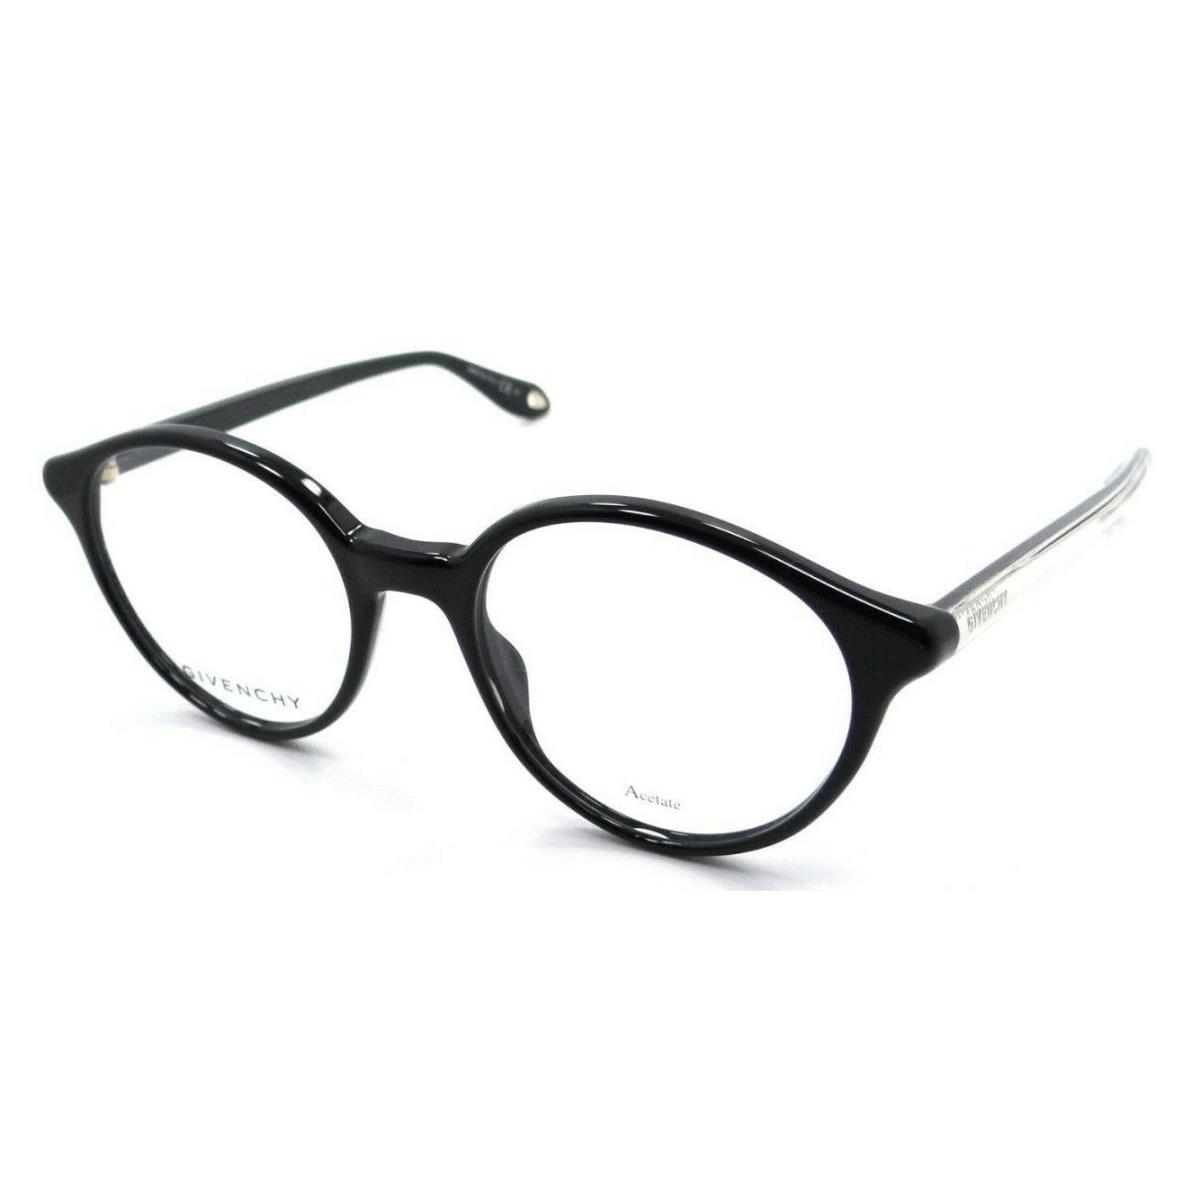 Givenchy Eyeglasses Frames GV 0075 807 48-18-145 Black Made in Italy